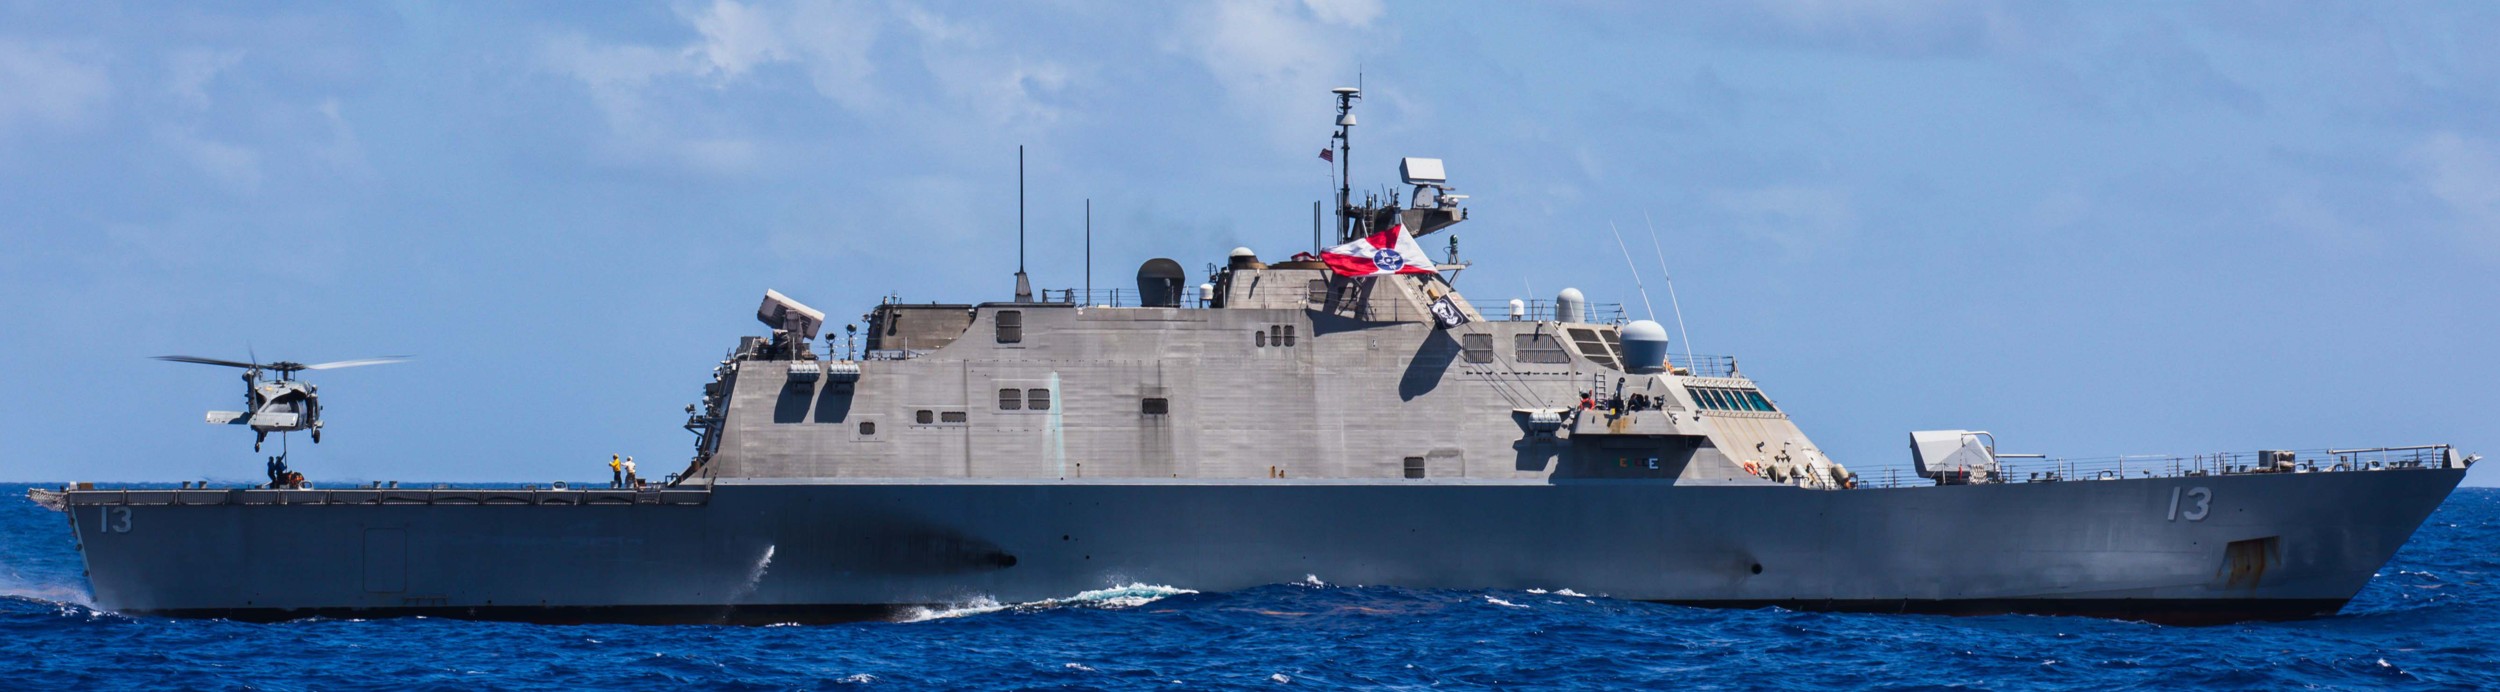 lcs-13 uss wichita freedom class littoral combat ship us navy caribbean sea 42